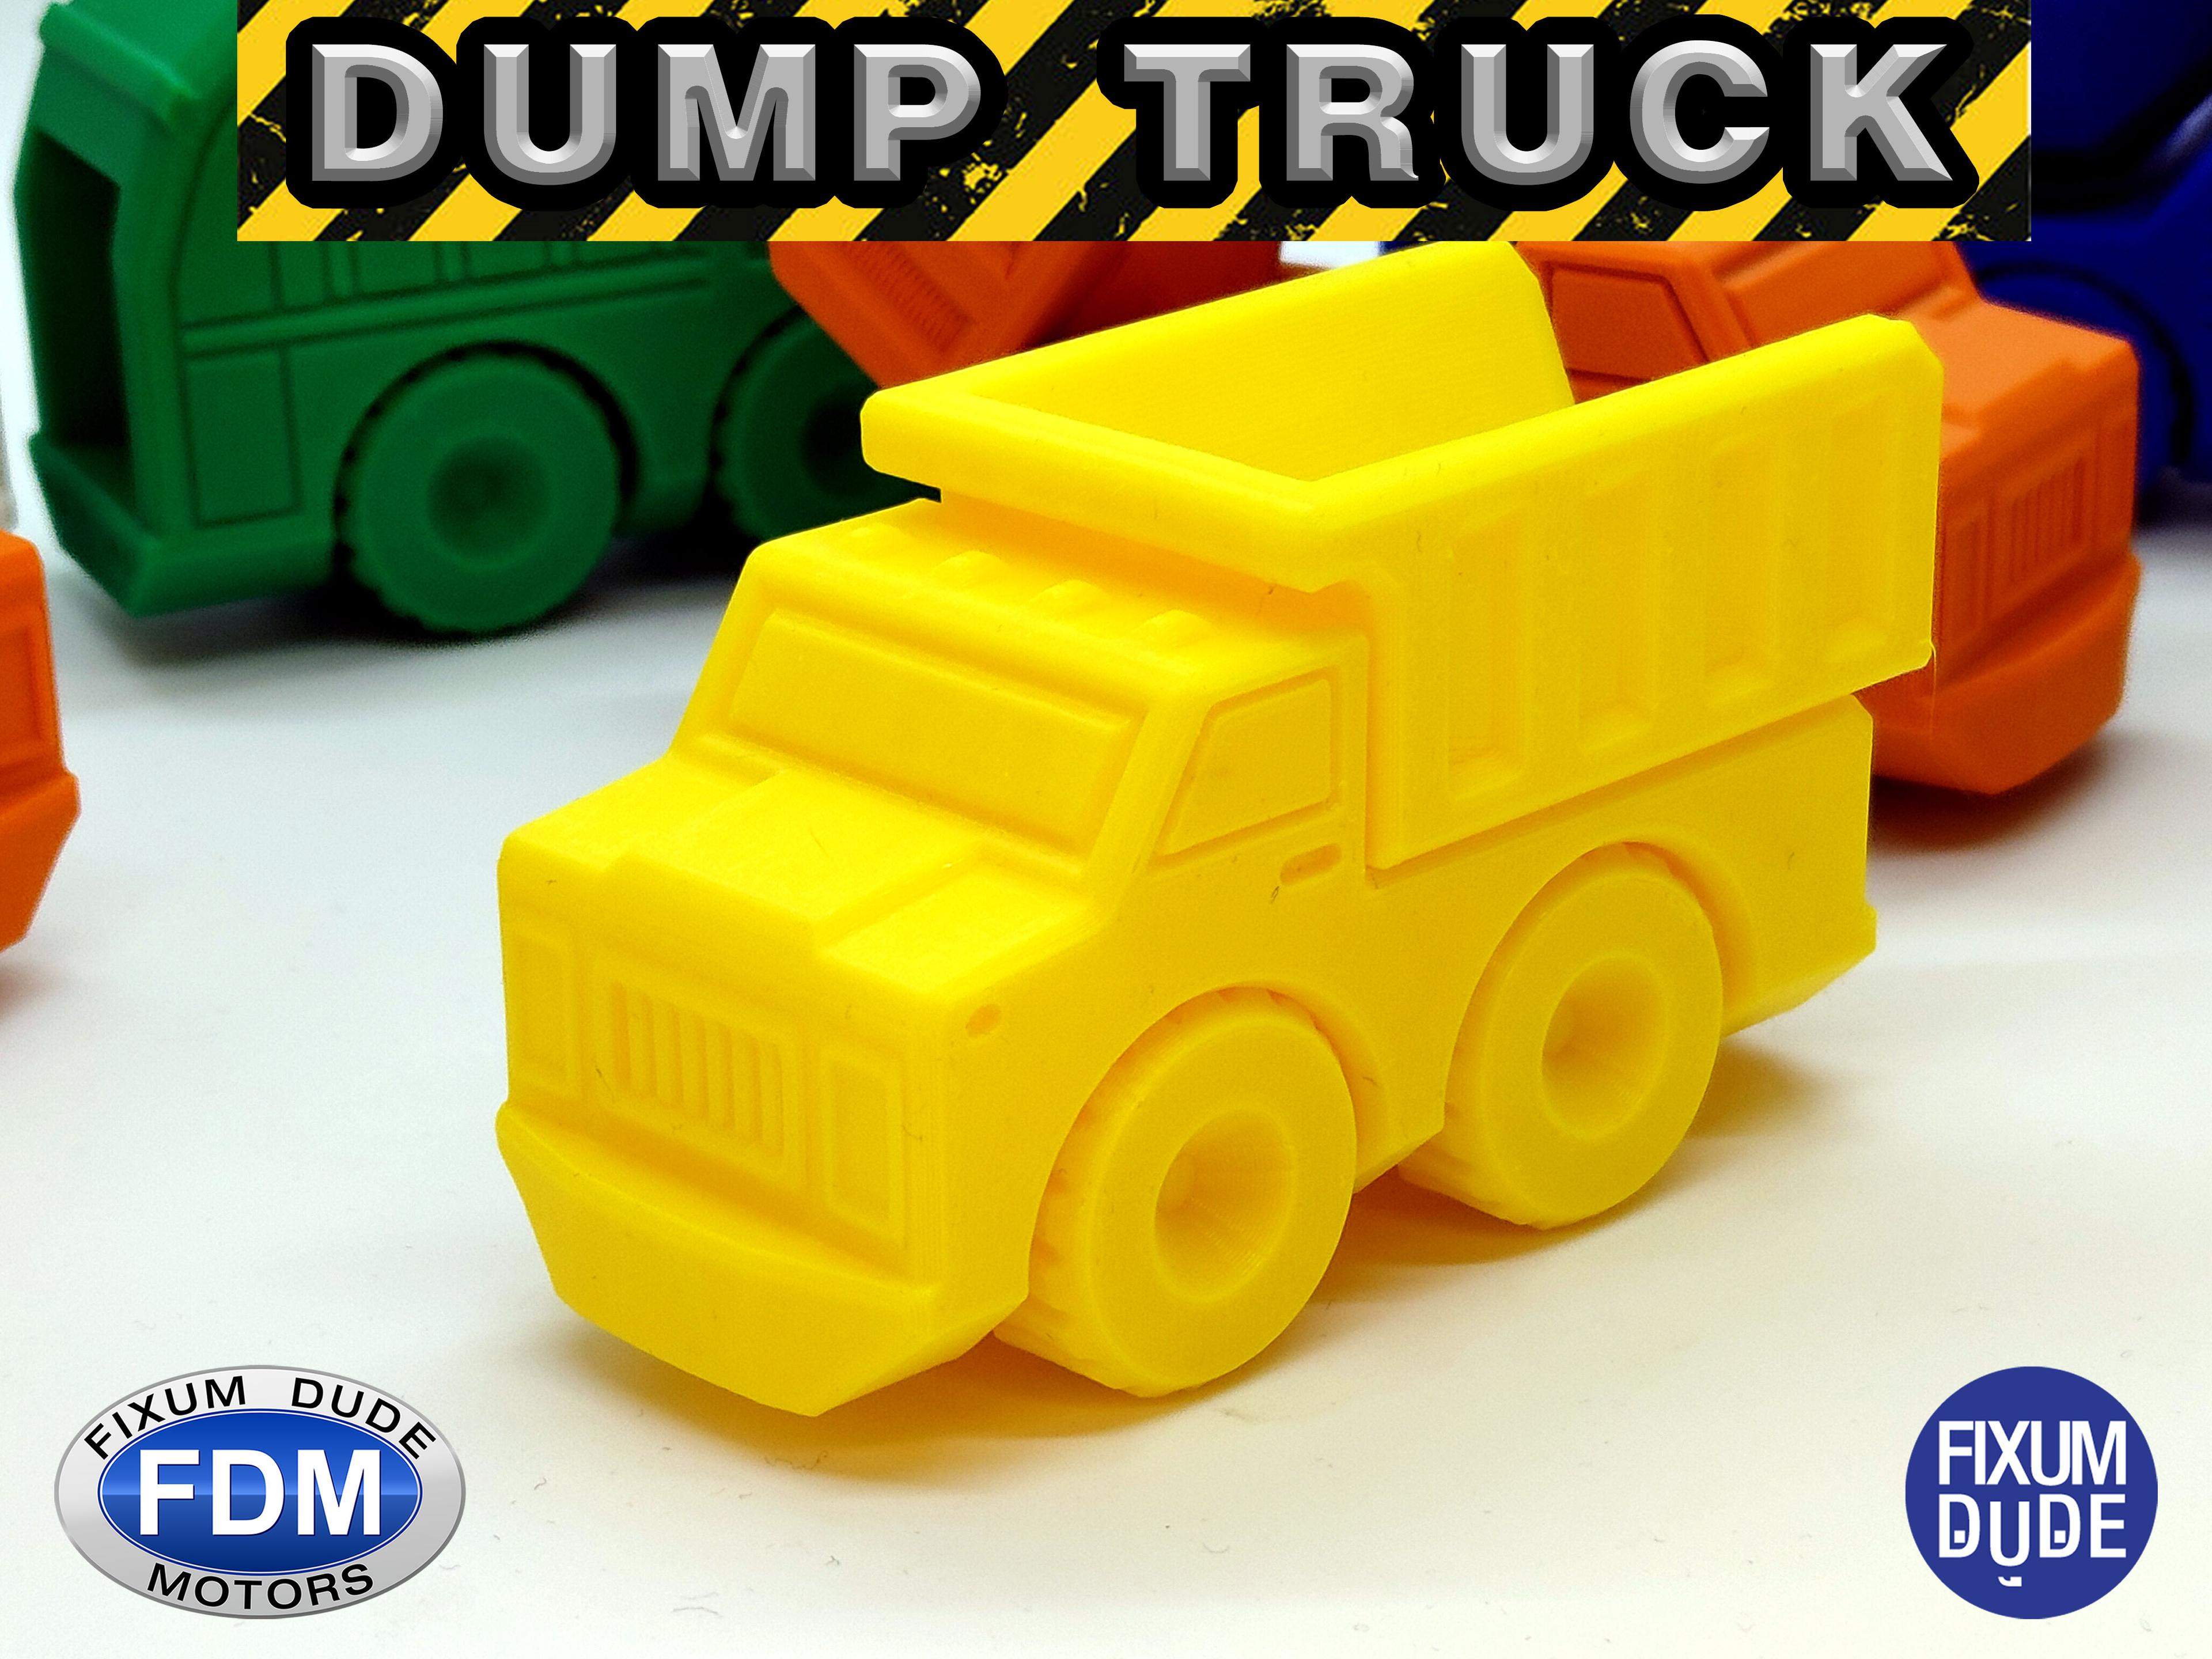 Fixum Dude Motors PiP Dump Truck 3d model